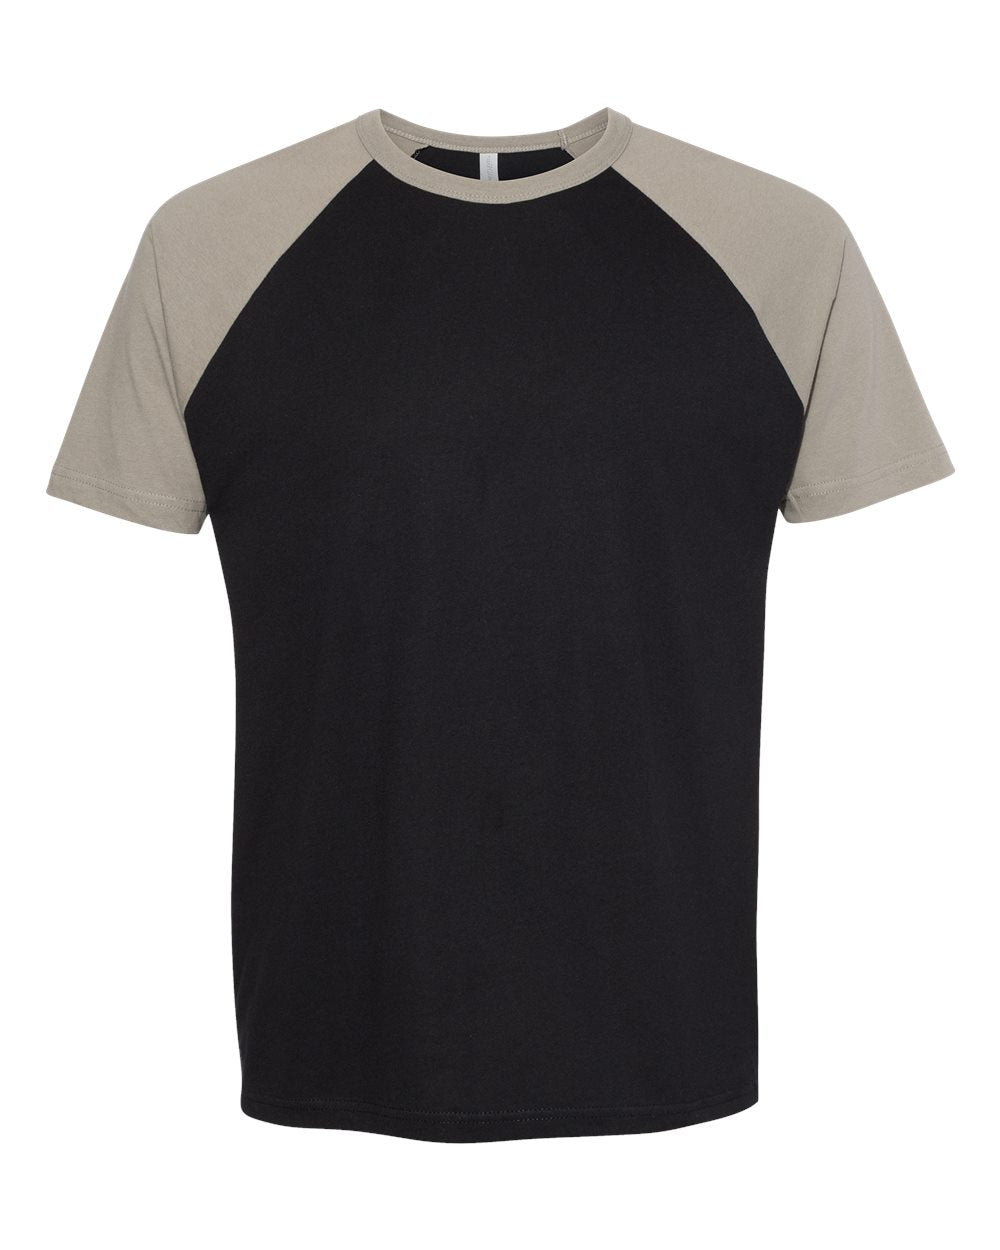 Adult Plain Raglan 3/4 T-Shirt - Orange Navy Medium | ILTEX Apparel